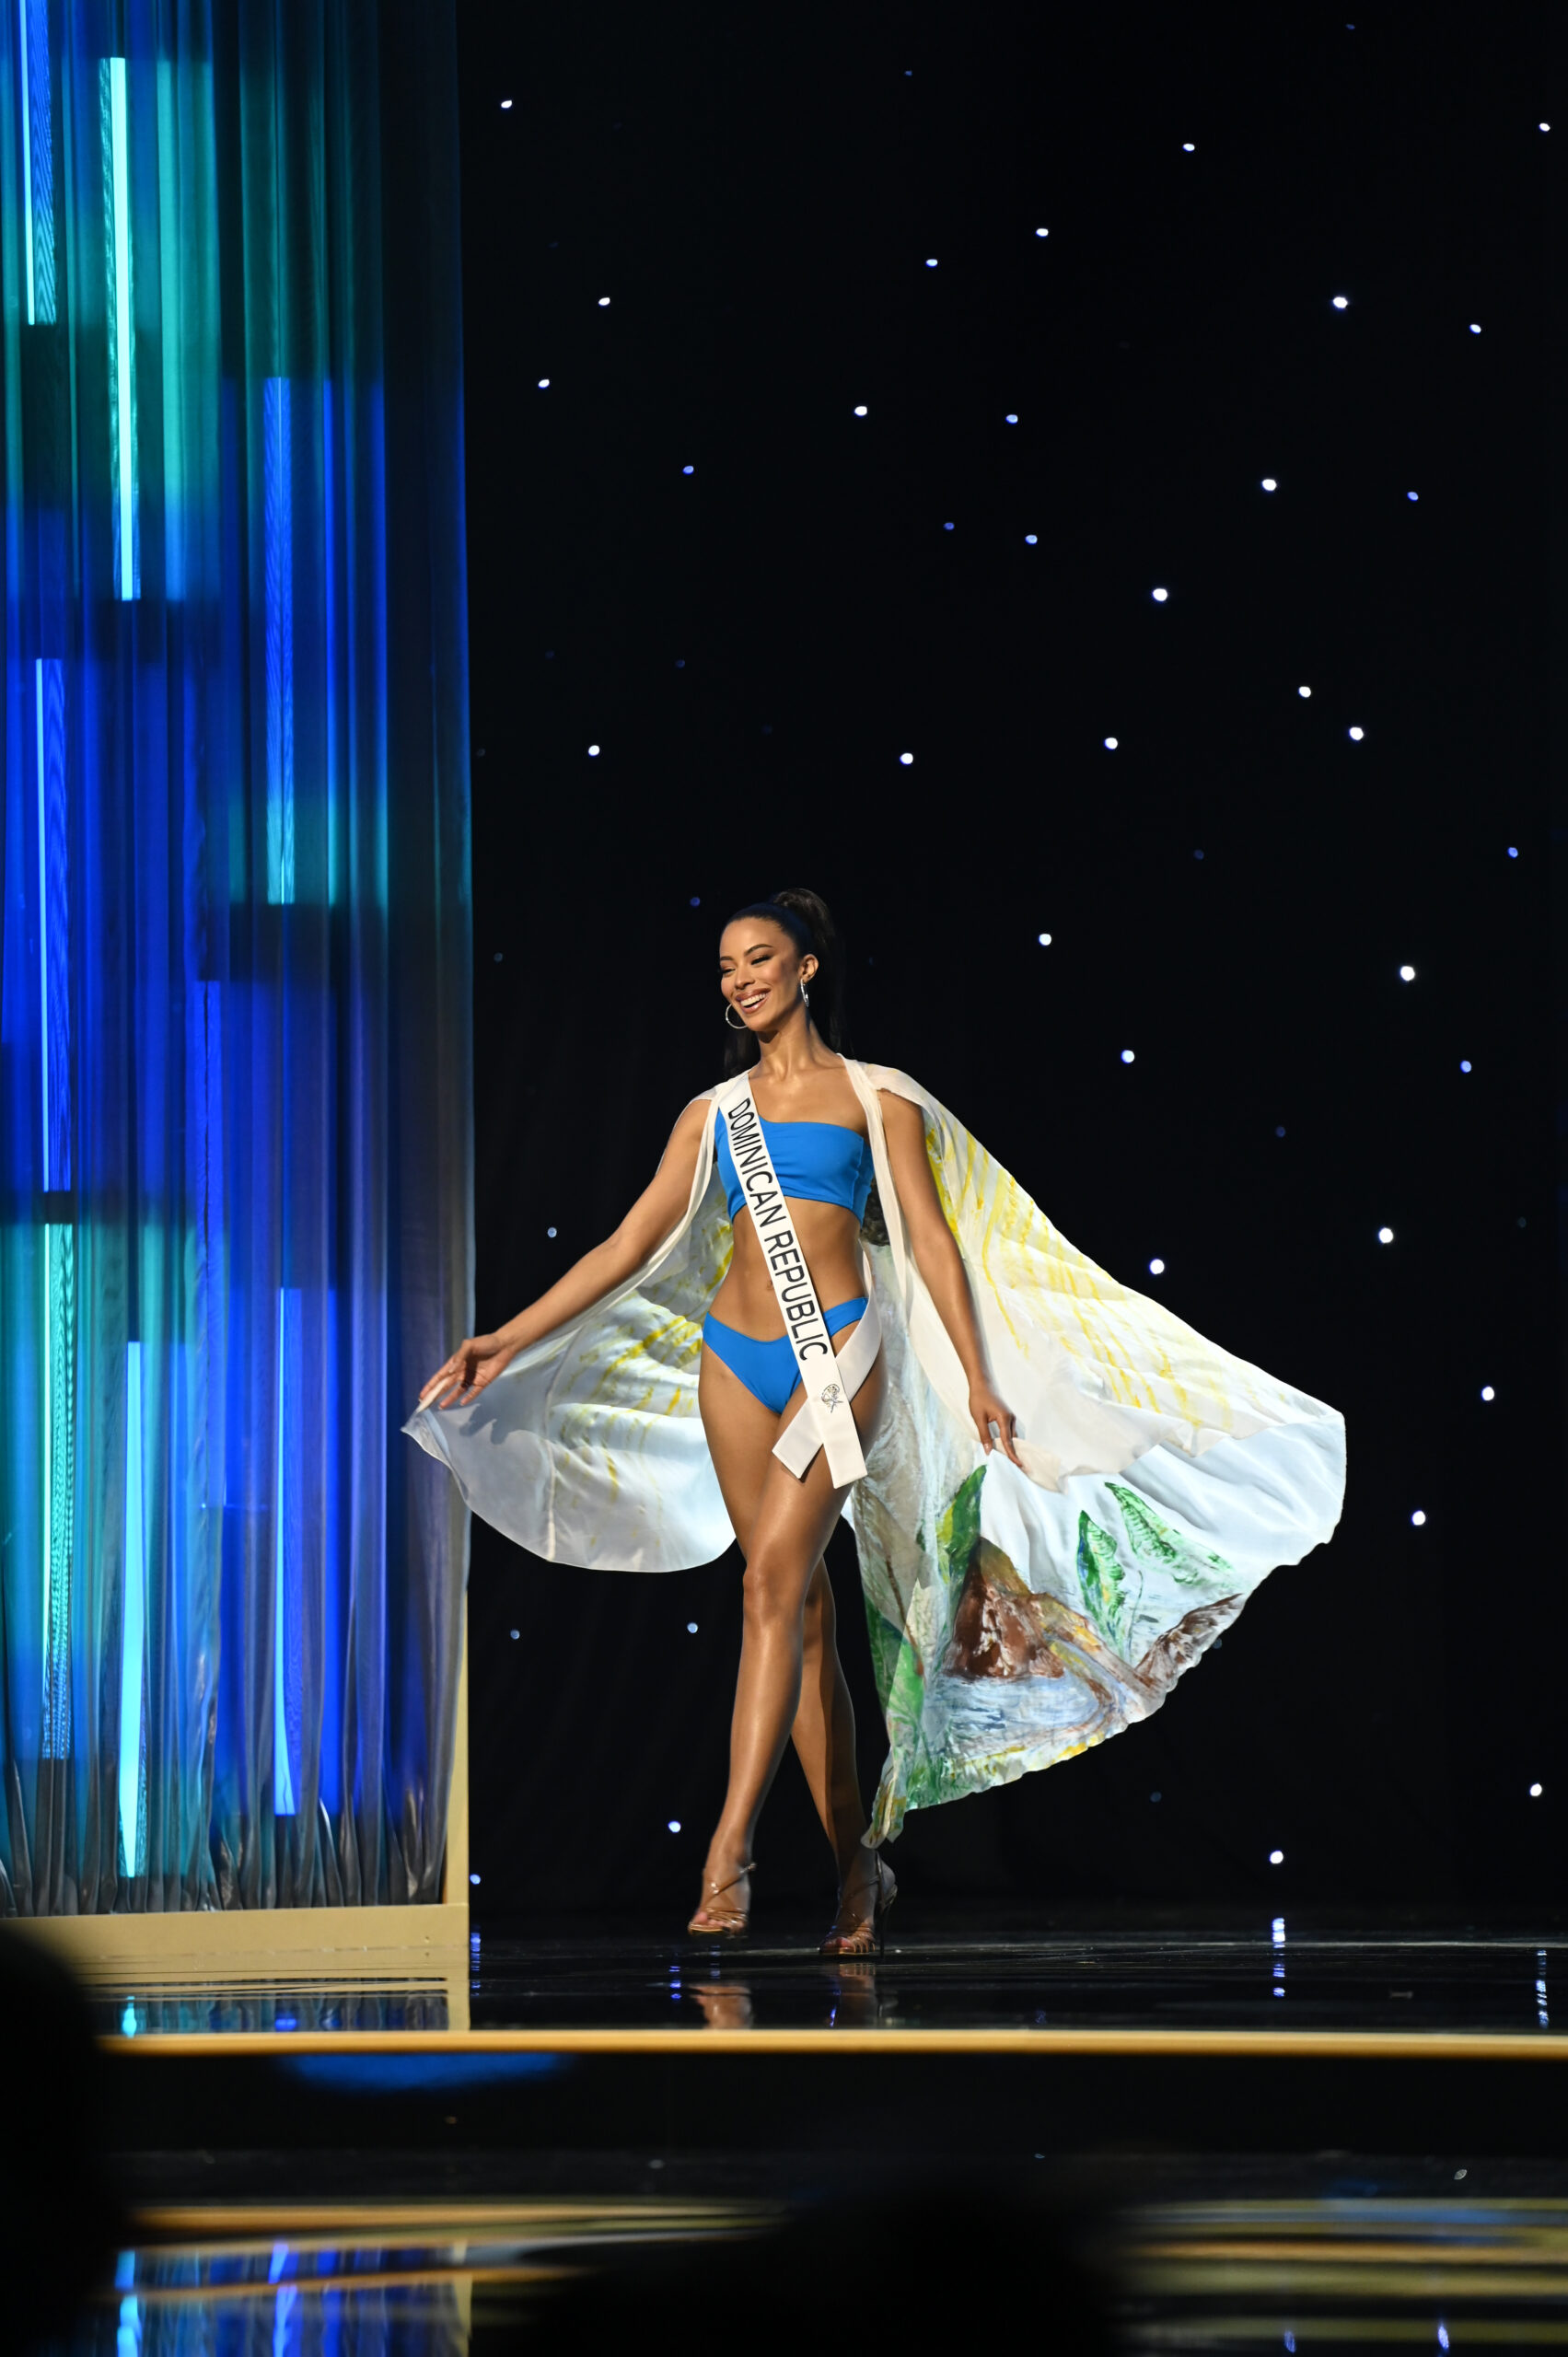 La dominicana Andreína Martínez expresa su "orgullo" tras Miss Universo